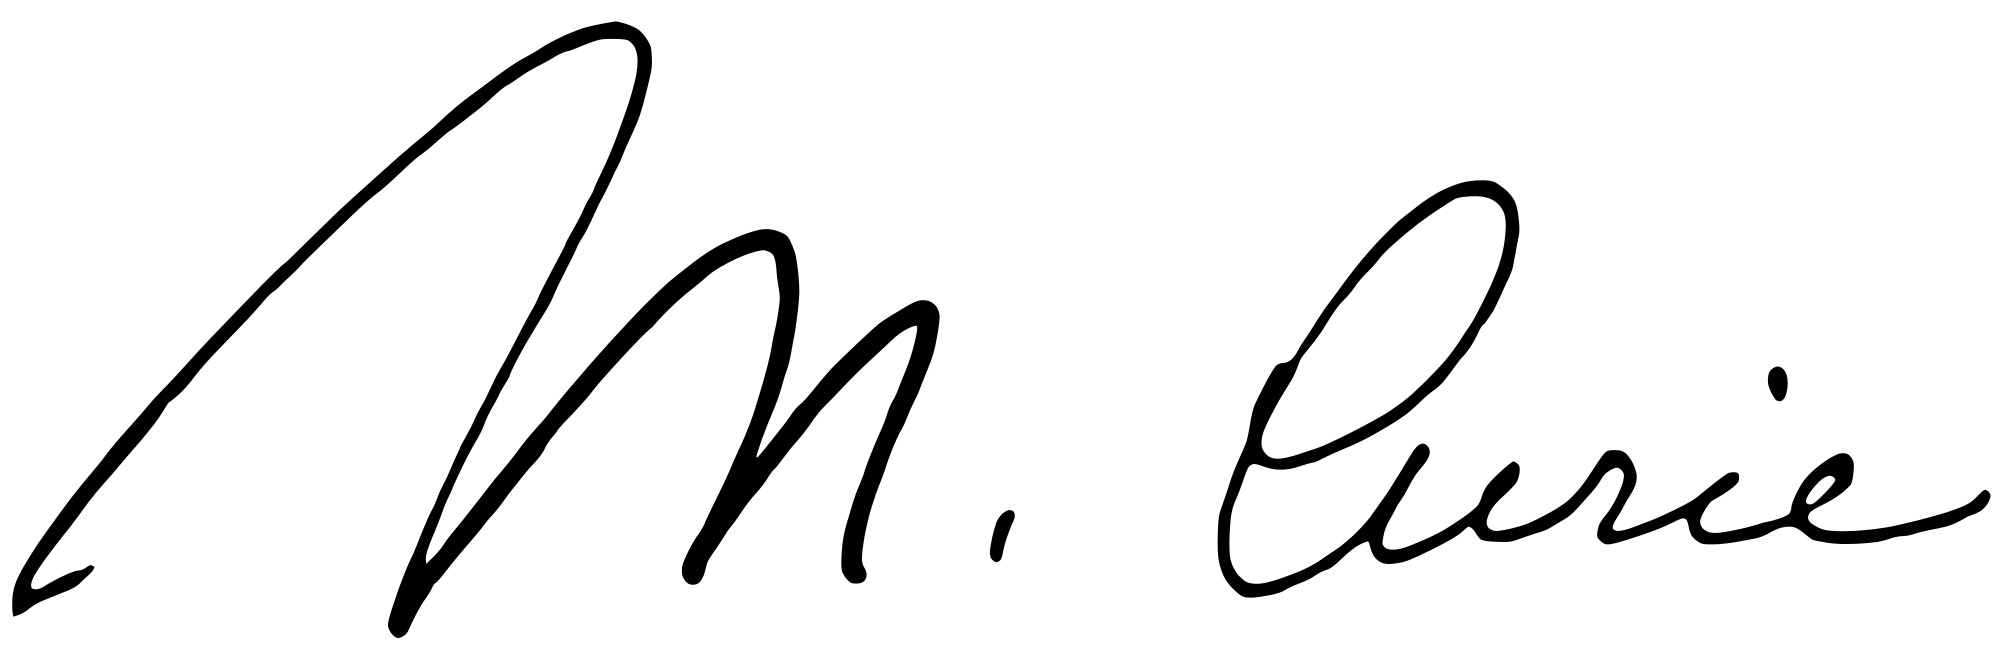 Marie Curie Signature icons